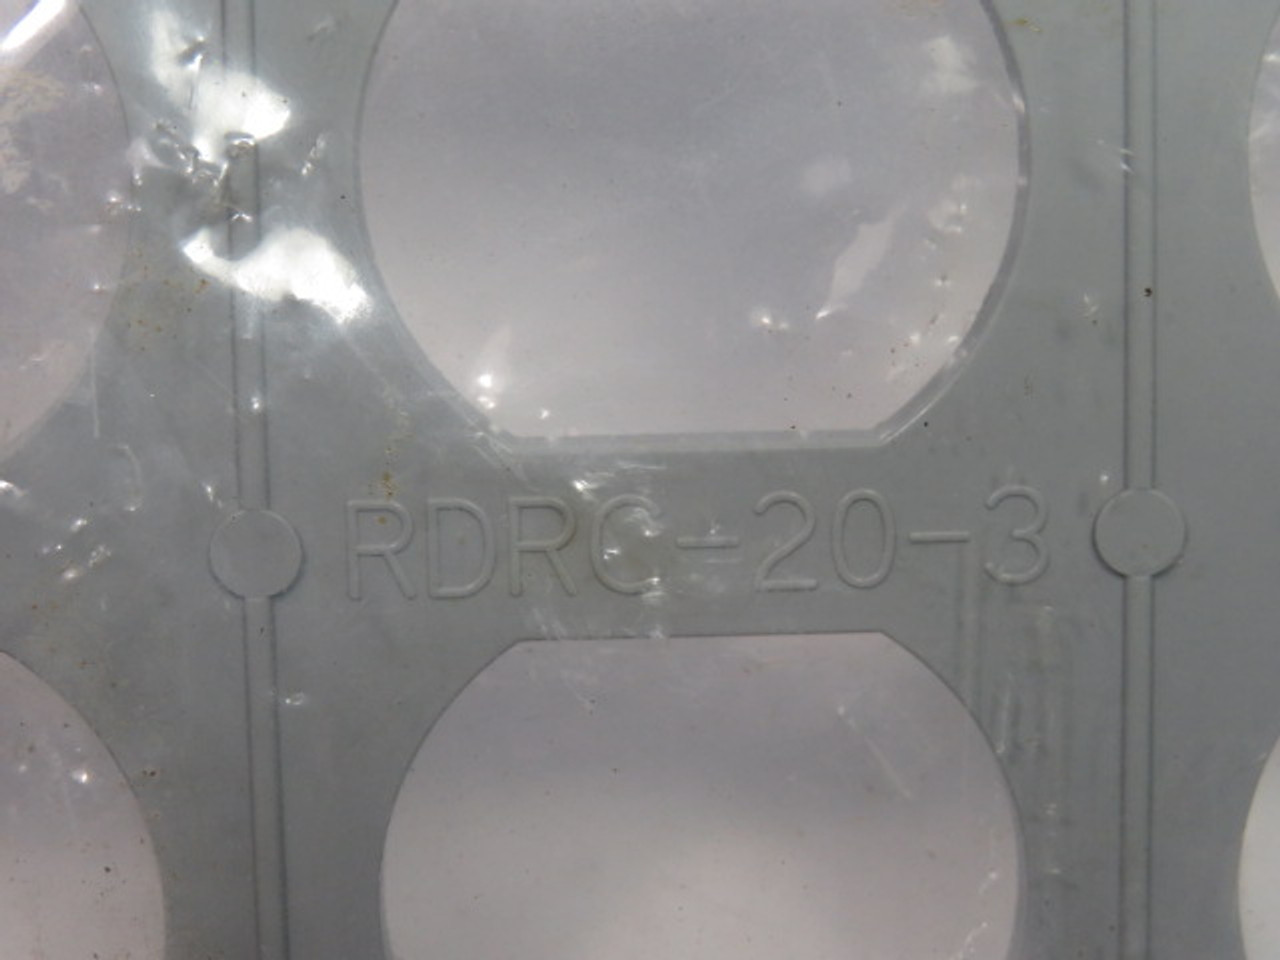 Royal RDRC-20-3 6-Gang Receptacle Outlet Cover GREY ! NWB !